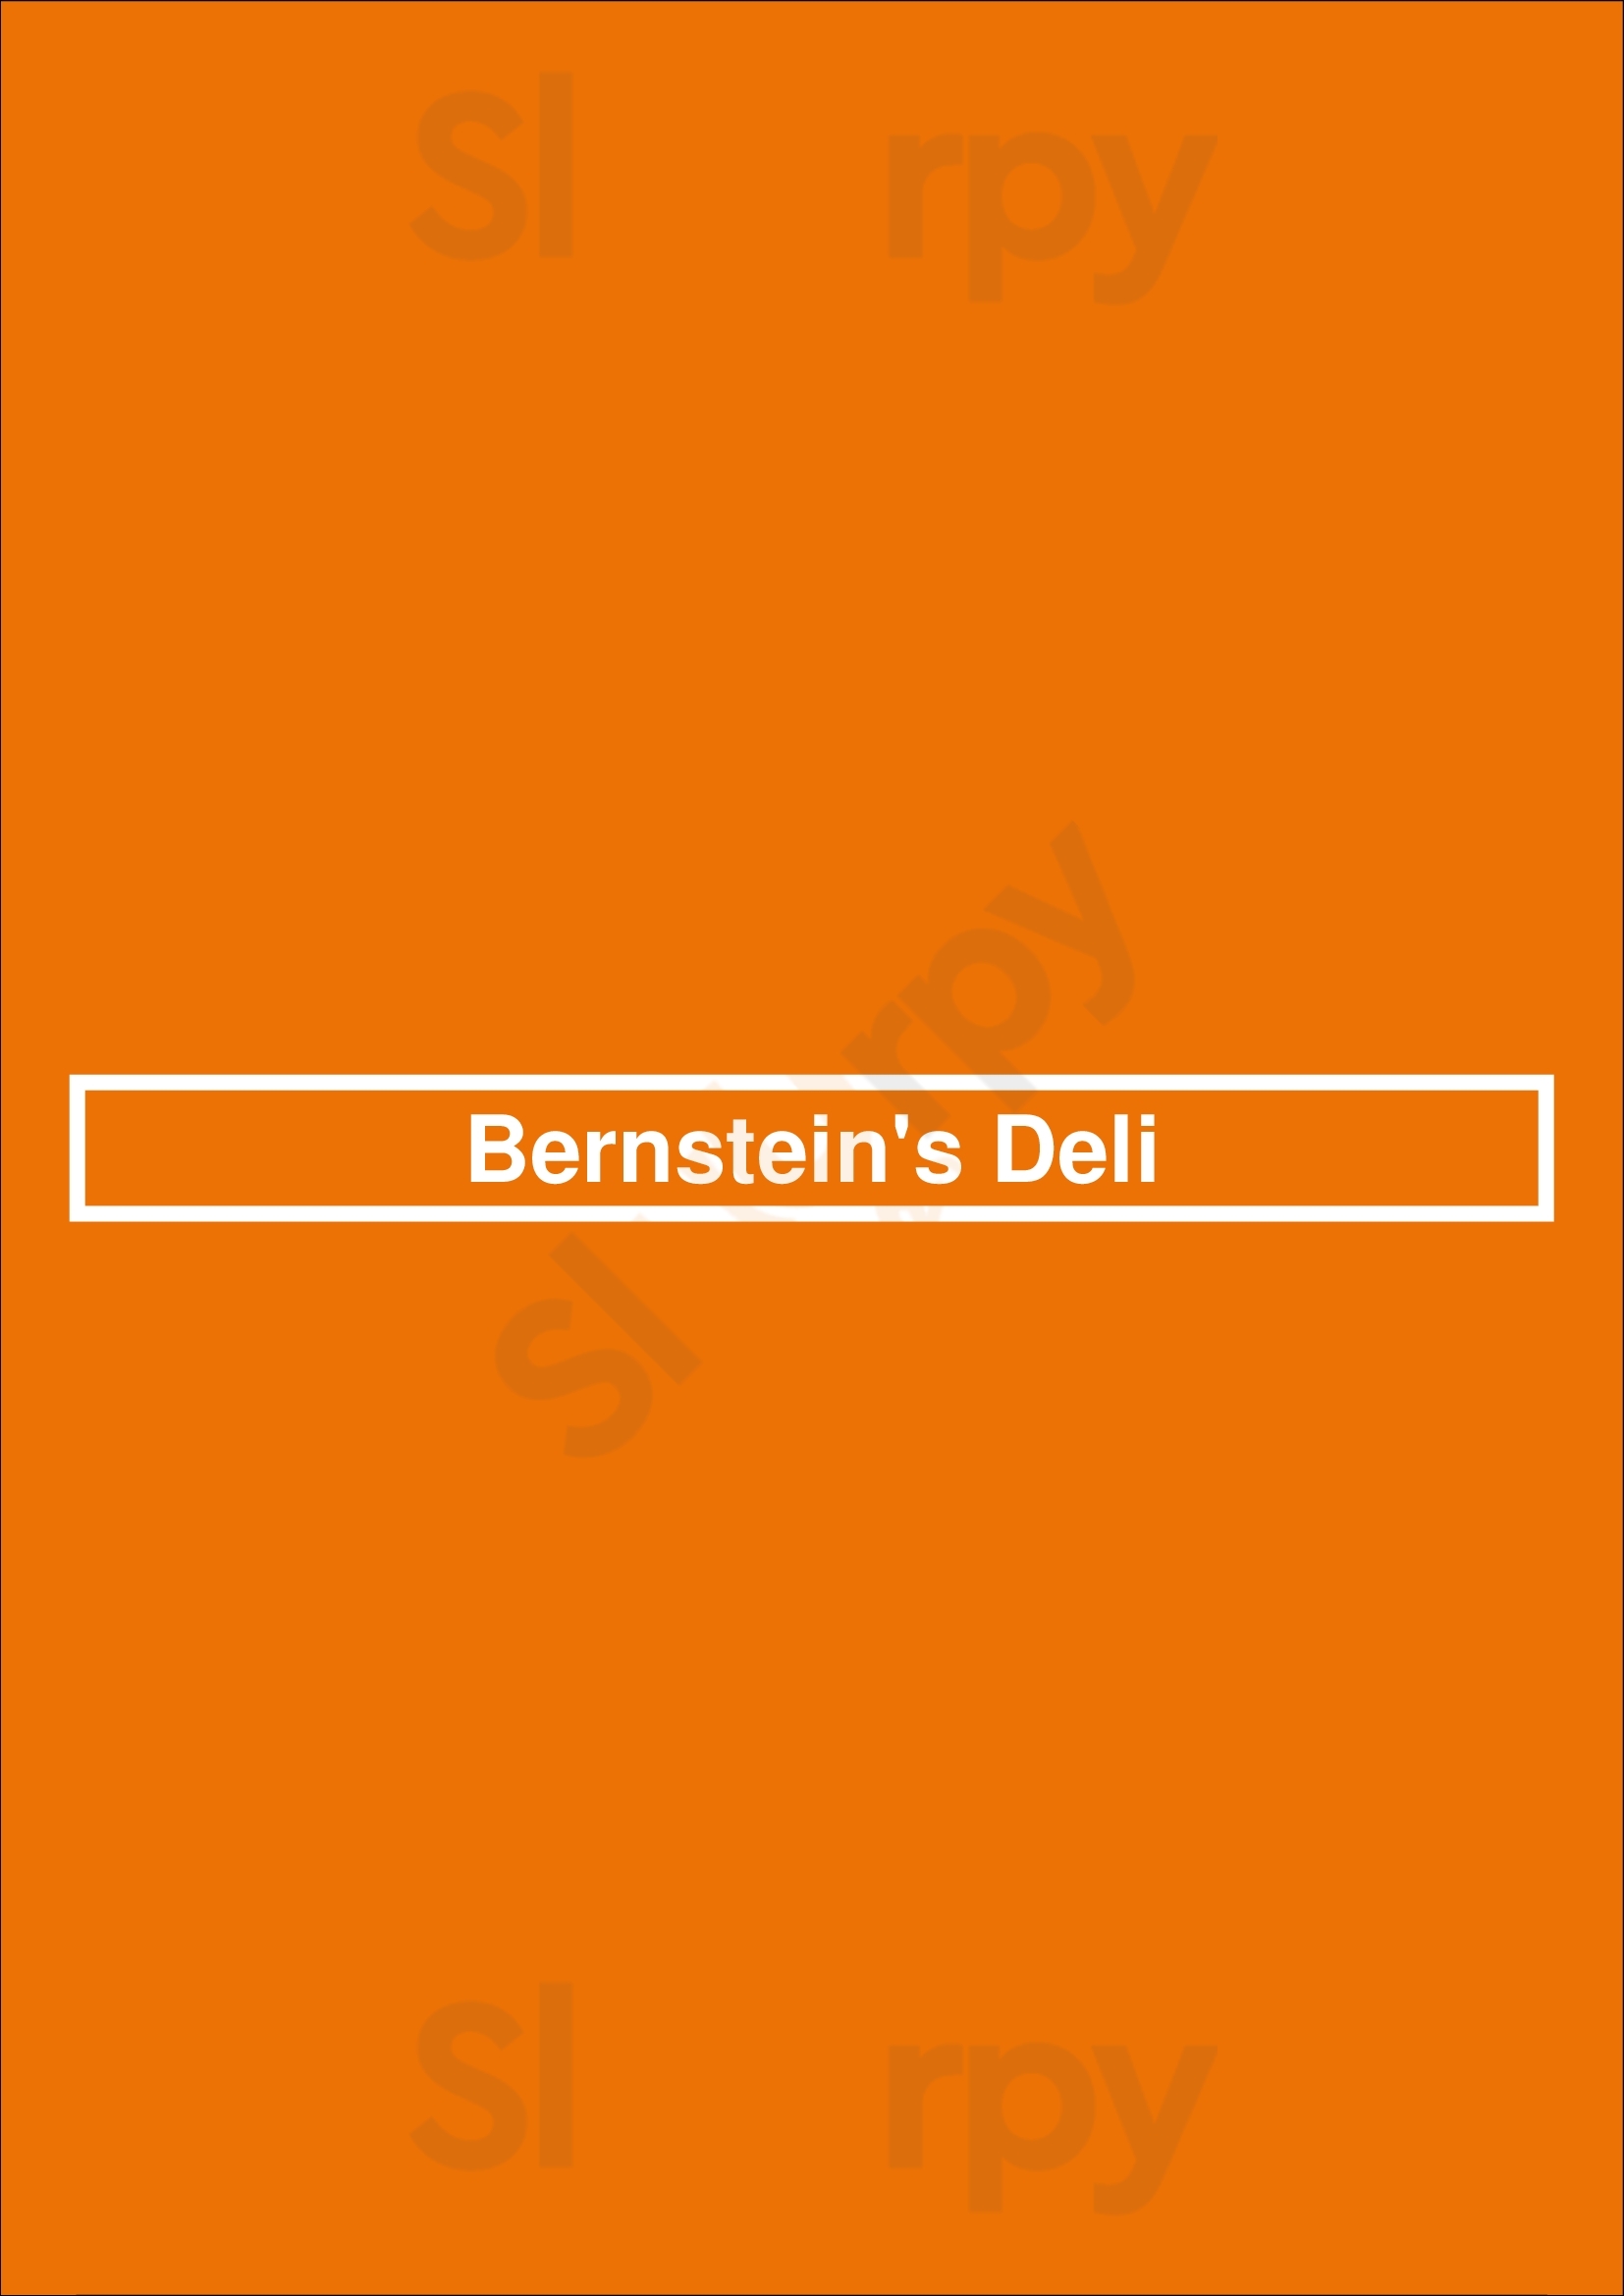 Bernstein's Deli Winnipeg Menu - 1